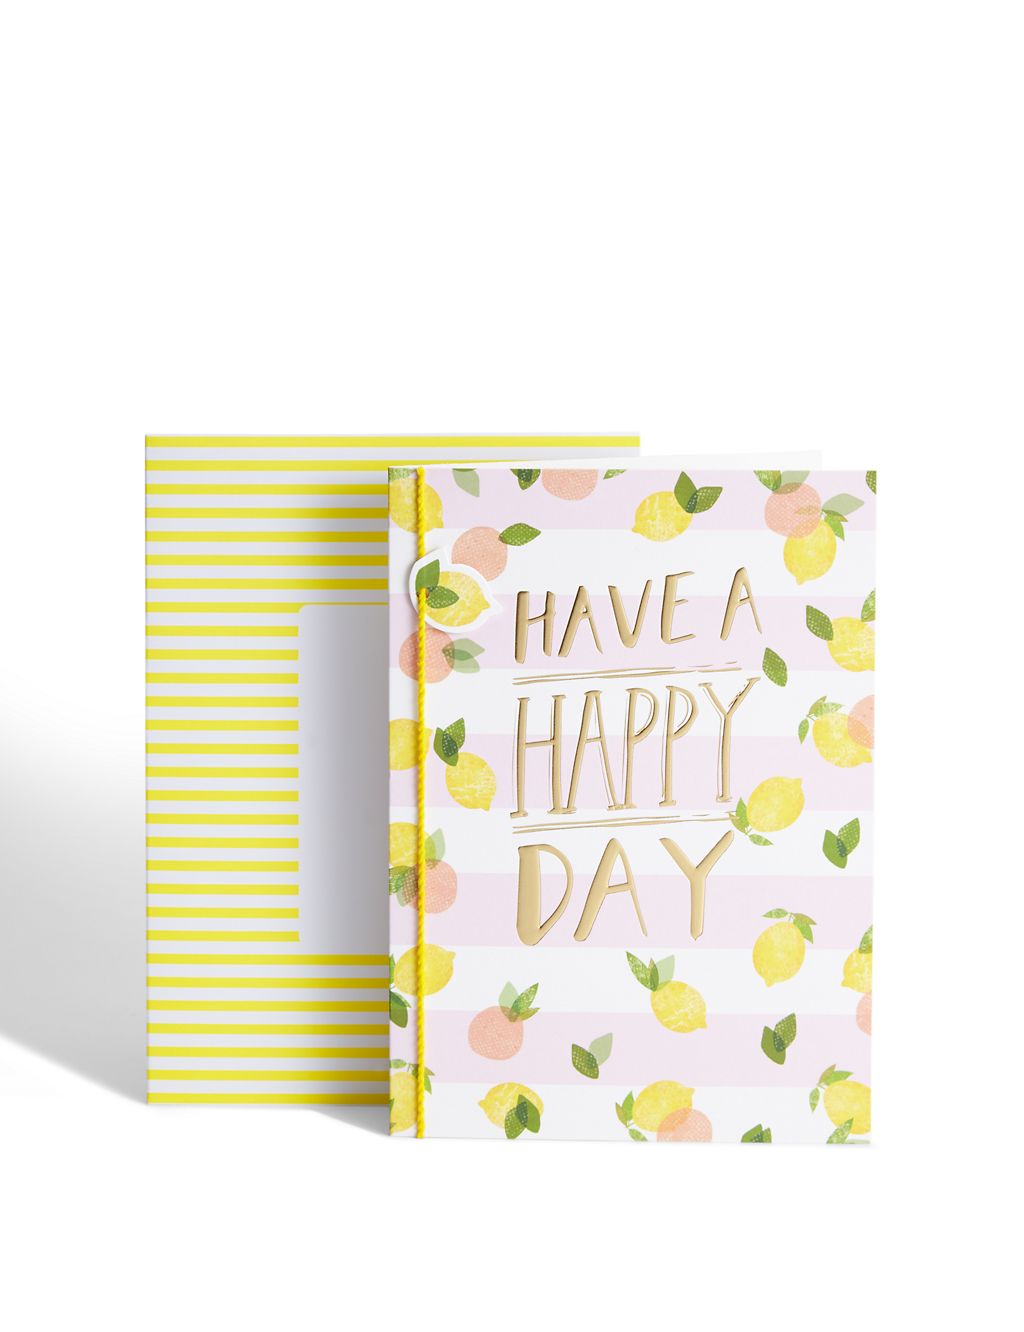 Happy Day Lemons Card 1 of 2